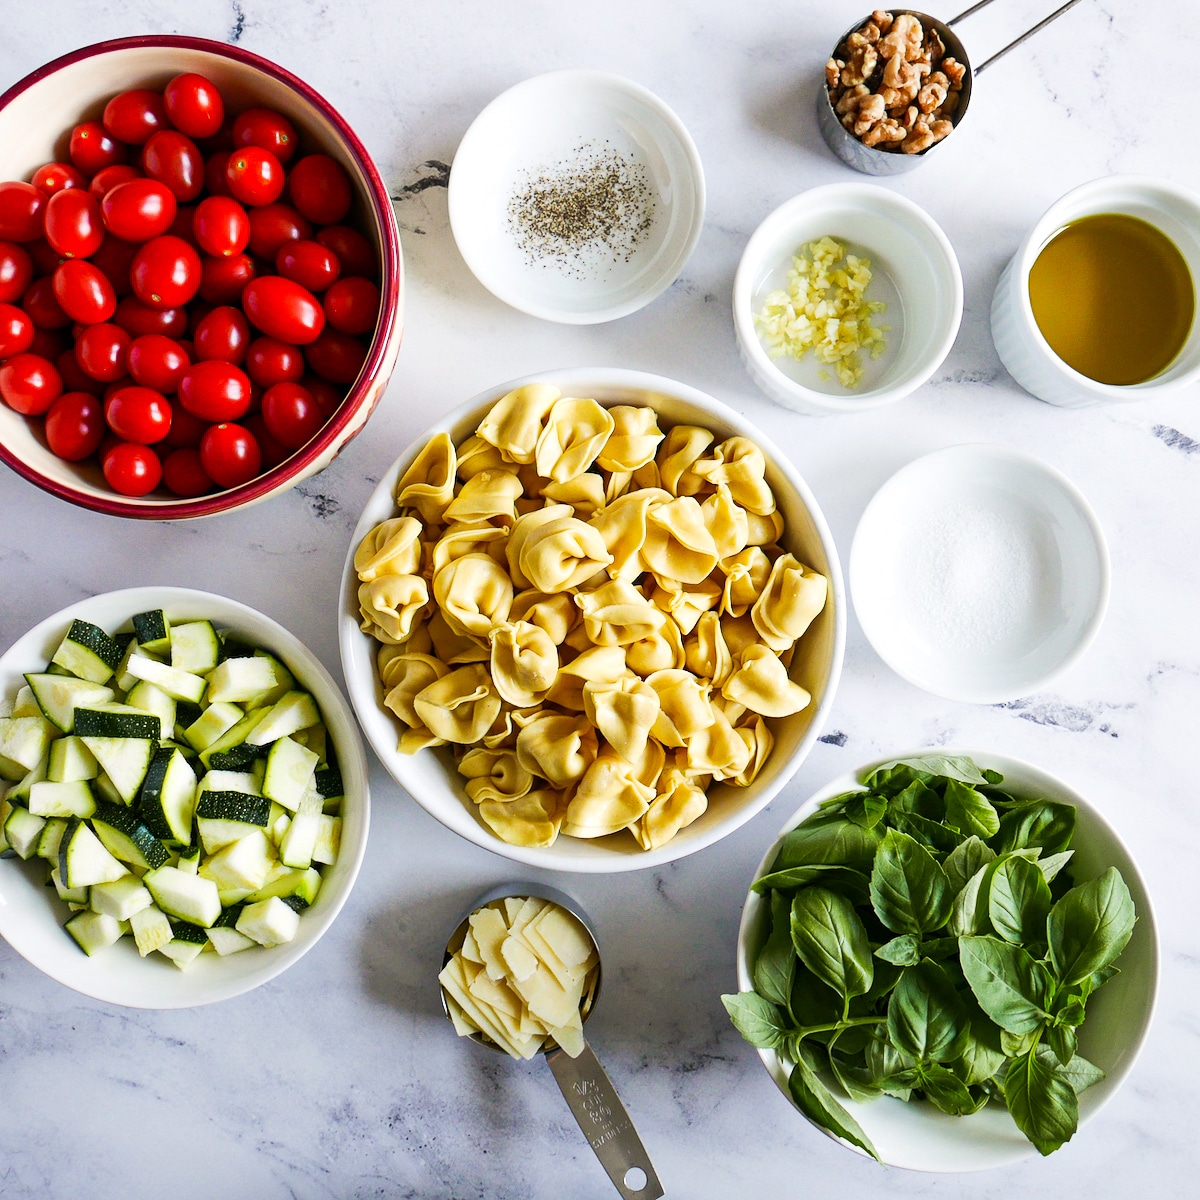 tortellini salad ingredients arranged on a table.